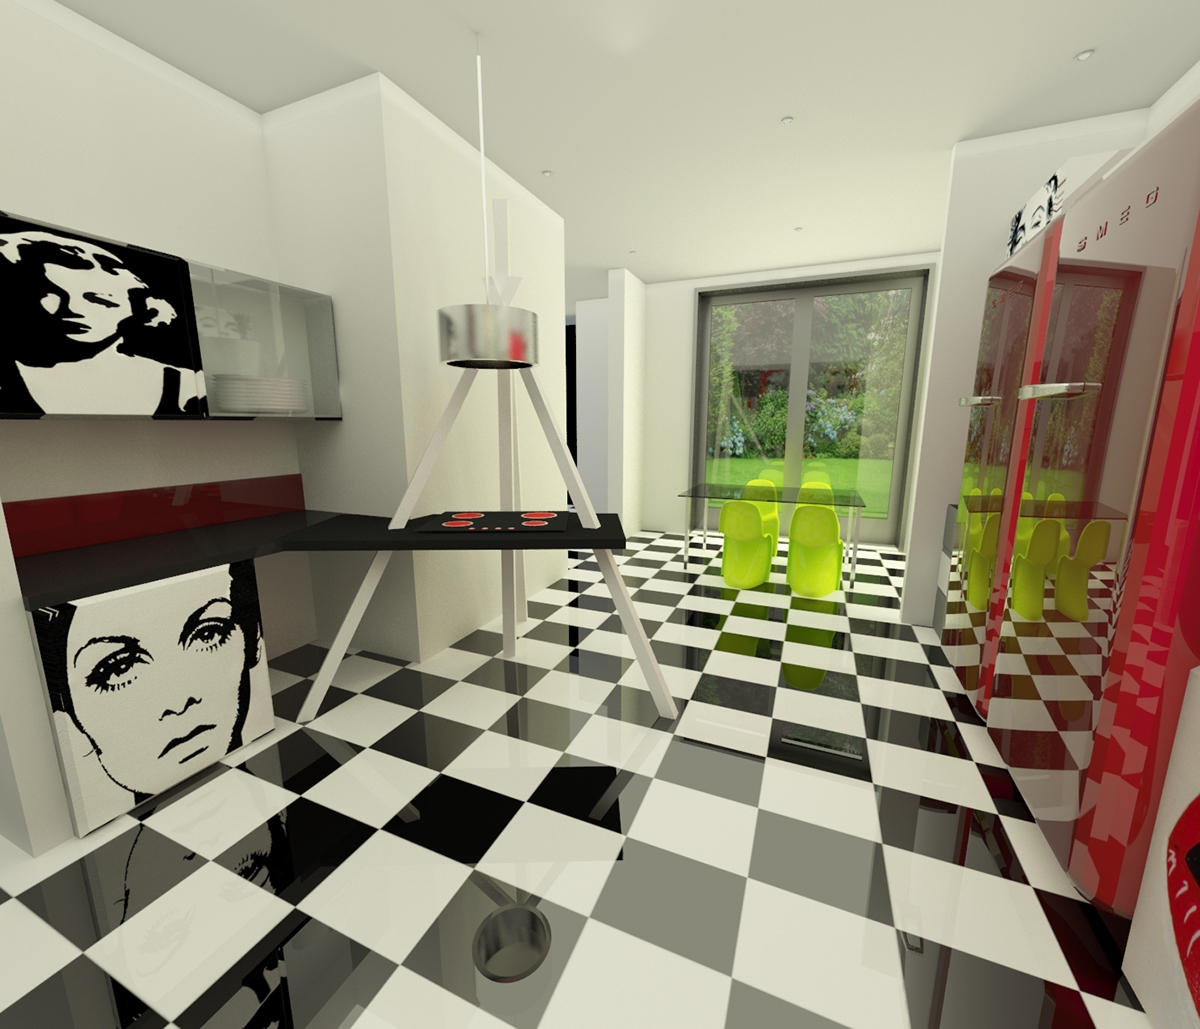 A pop art kitchen with a checkered floor.